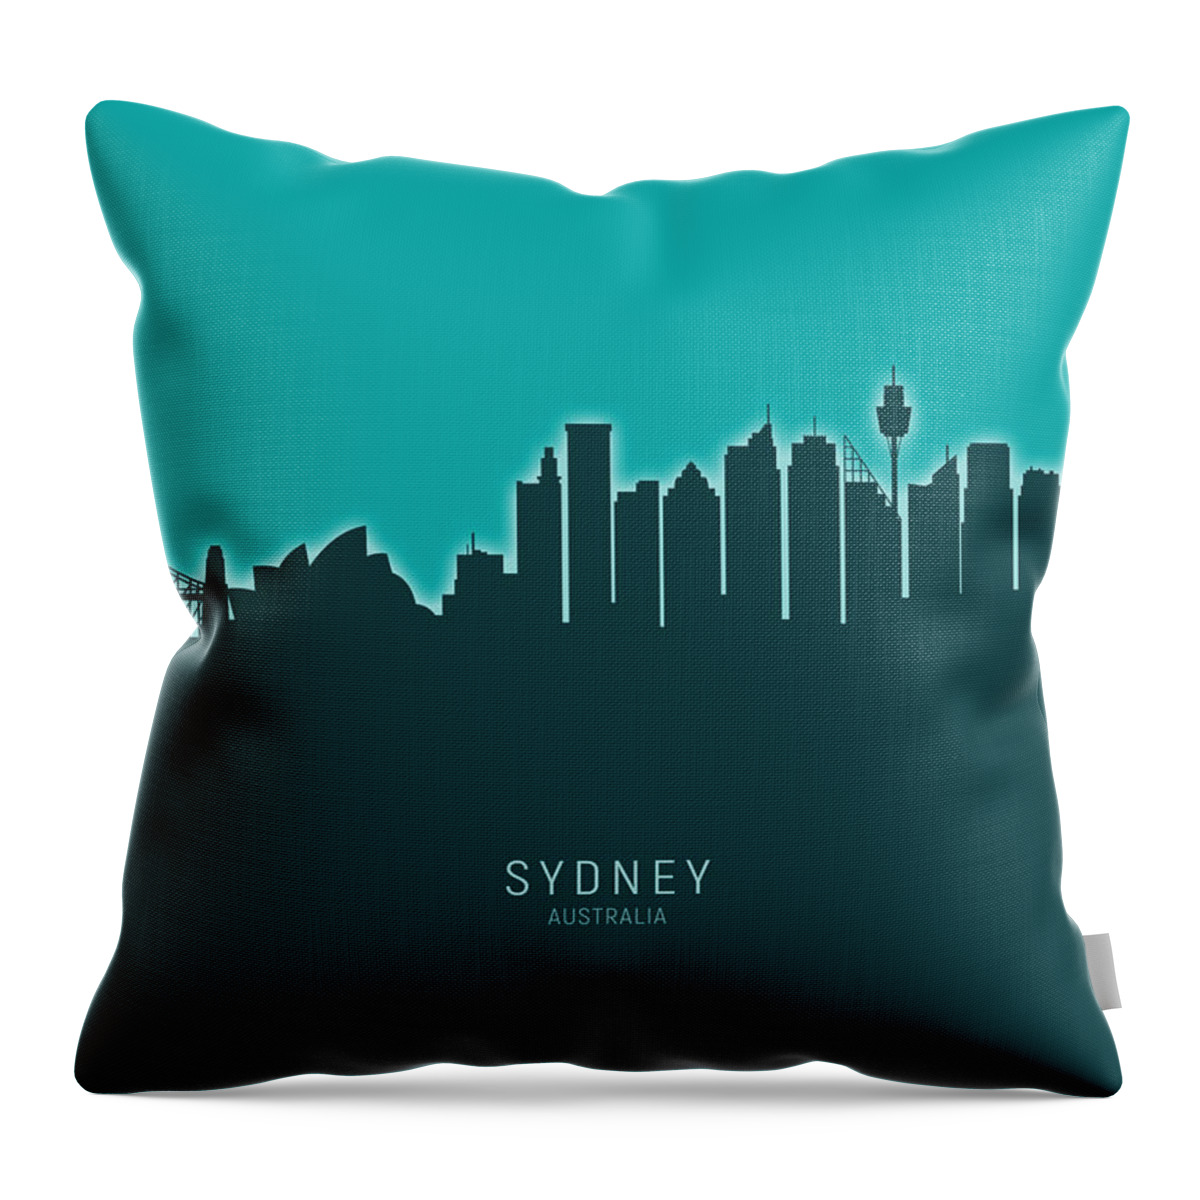 Sydney Throw Pillow featuring the digital art Sydney Australia Skyline #33 by Michael Tompsett